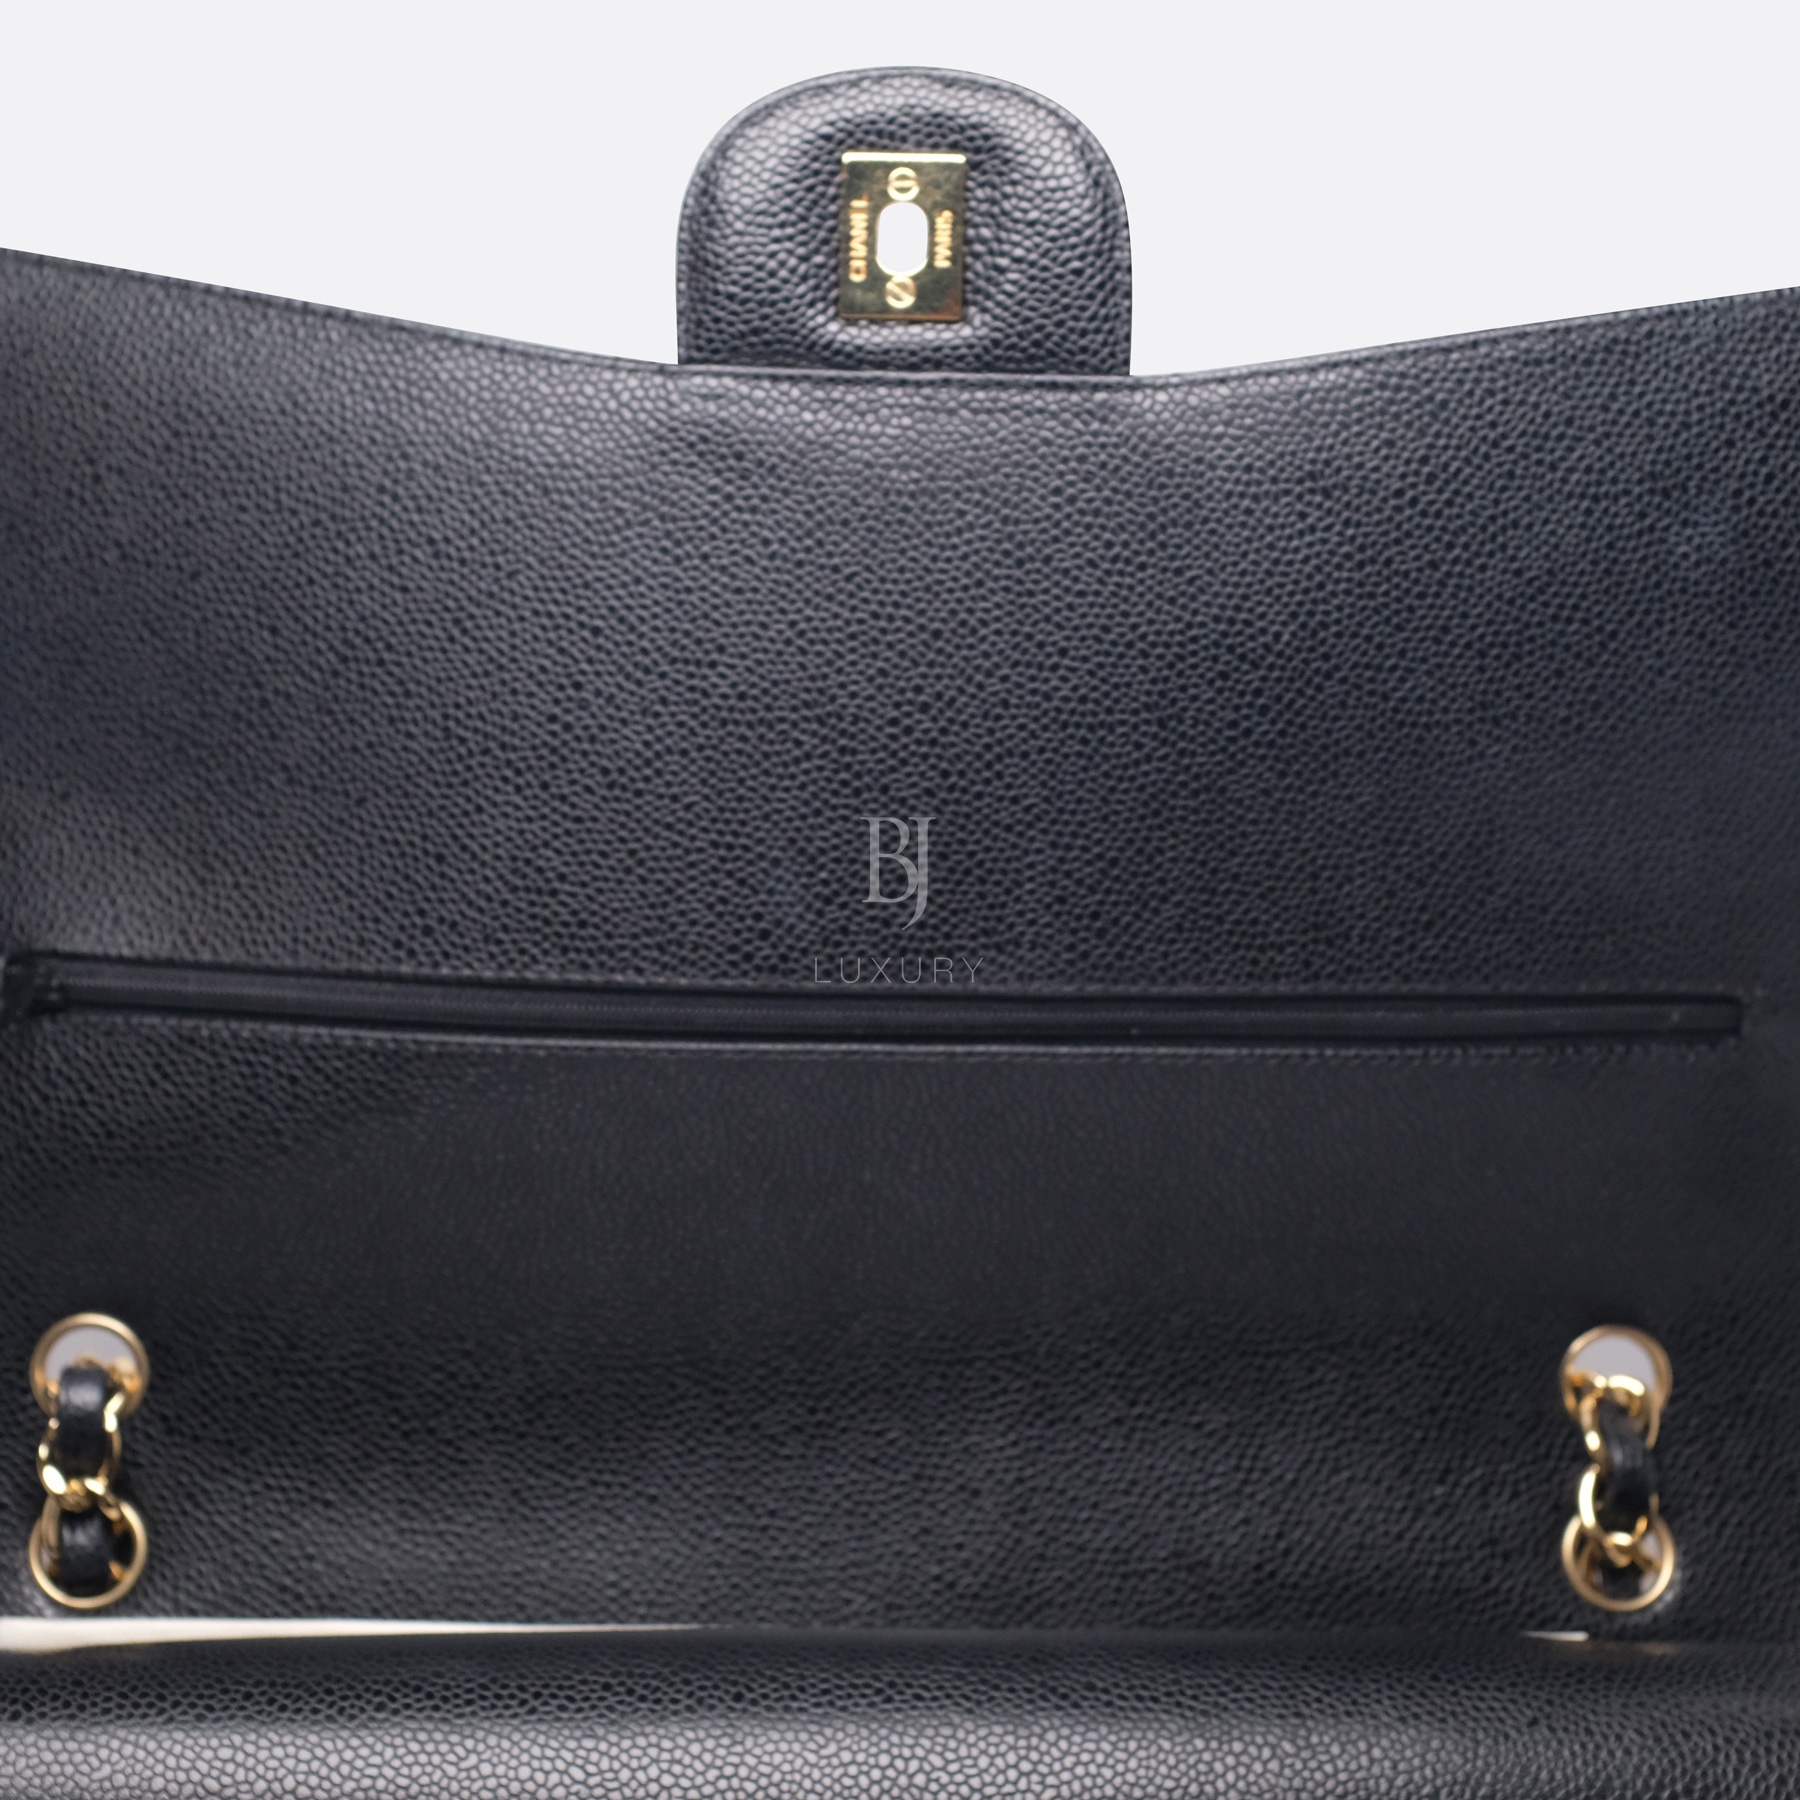 Chanel Classic Handbag Caviar Maxi Black BJ Luxury 15.jpg